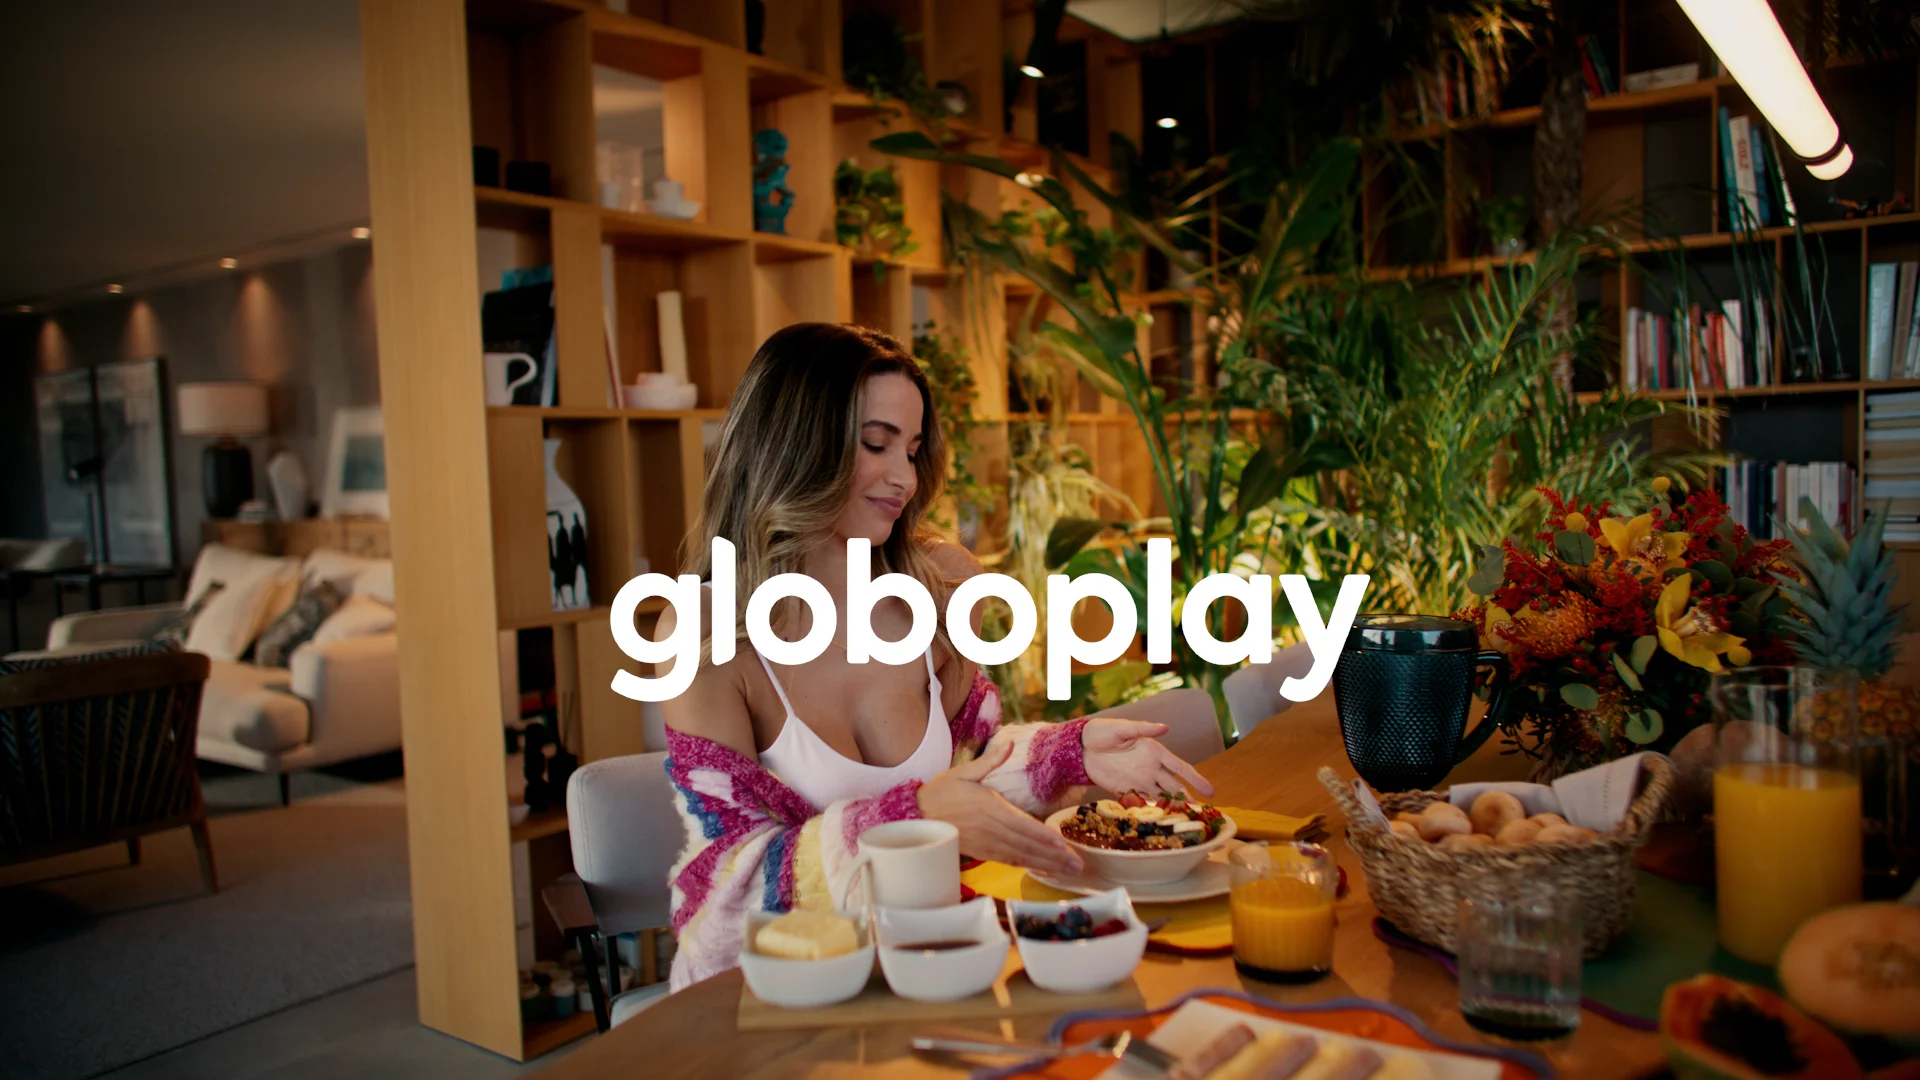 GLOBOPLAY on Vimeo